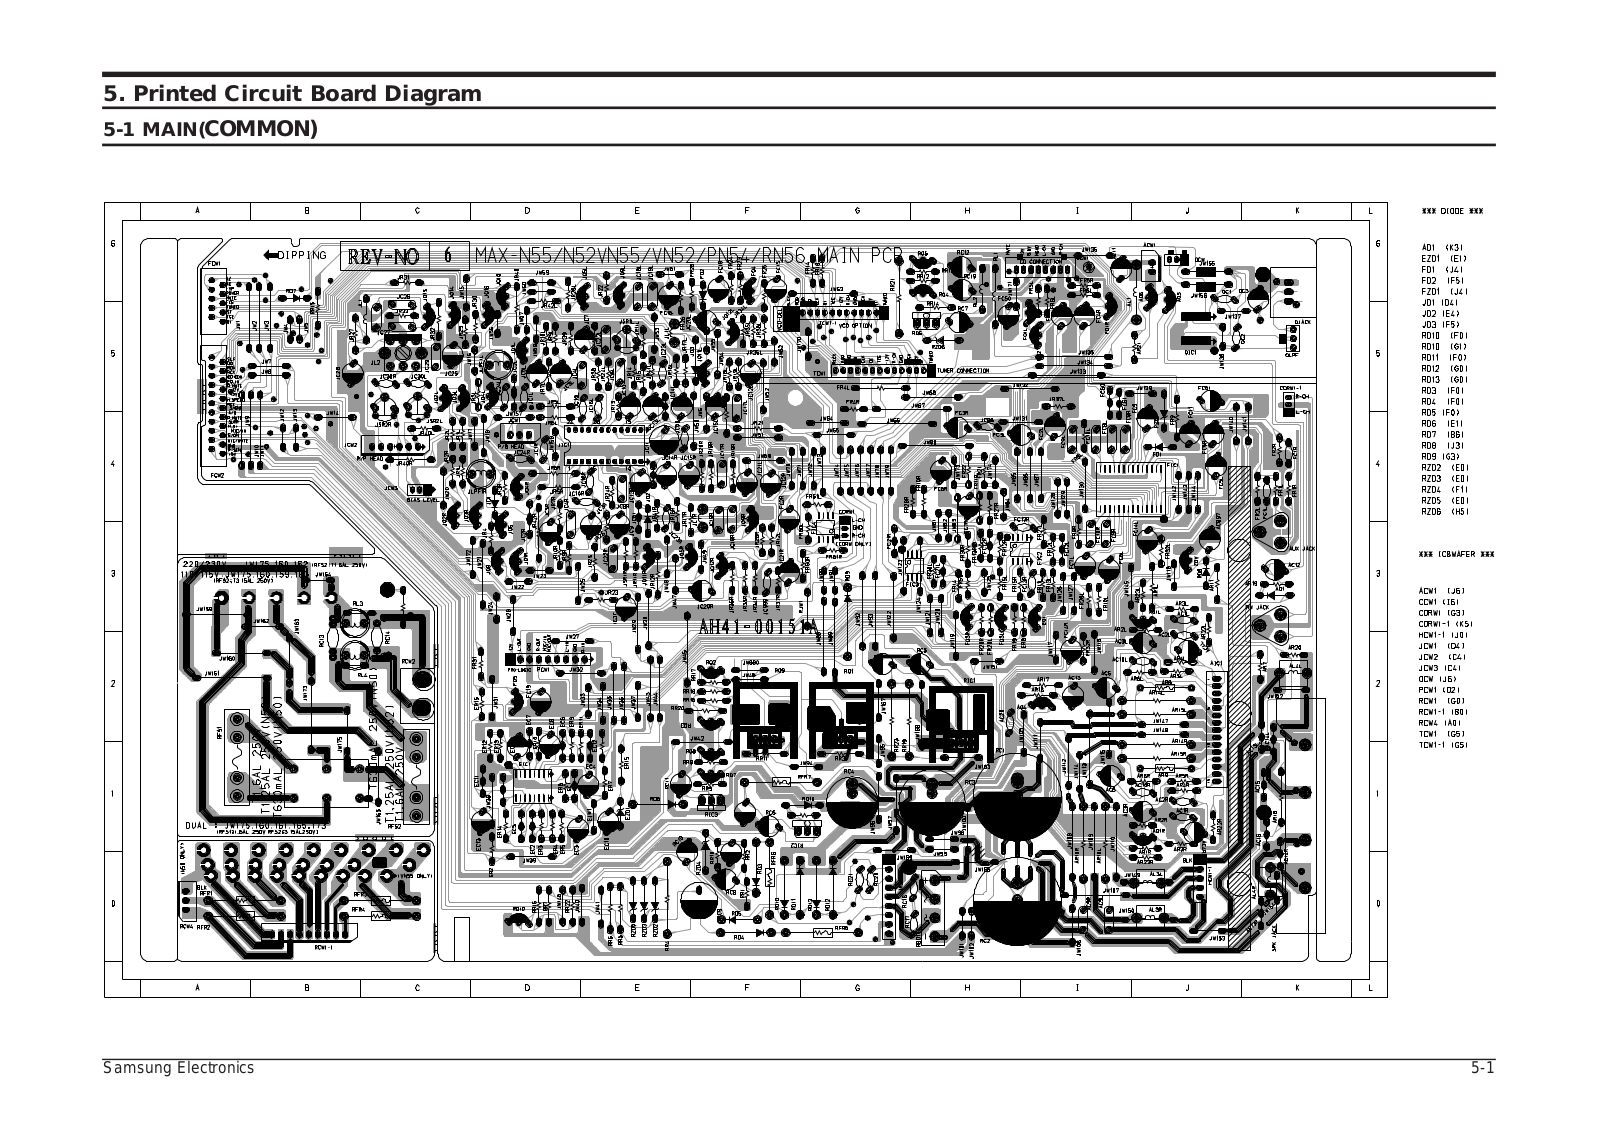 SAMSUNG MAX-N52, MAX-N55, MAX-N57, MAX-N50 Printed Circuit Board Diagram